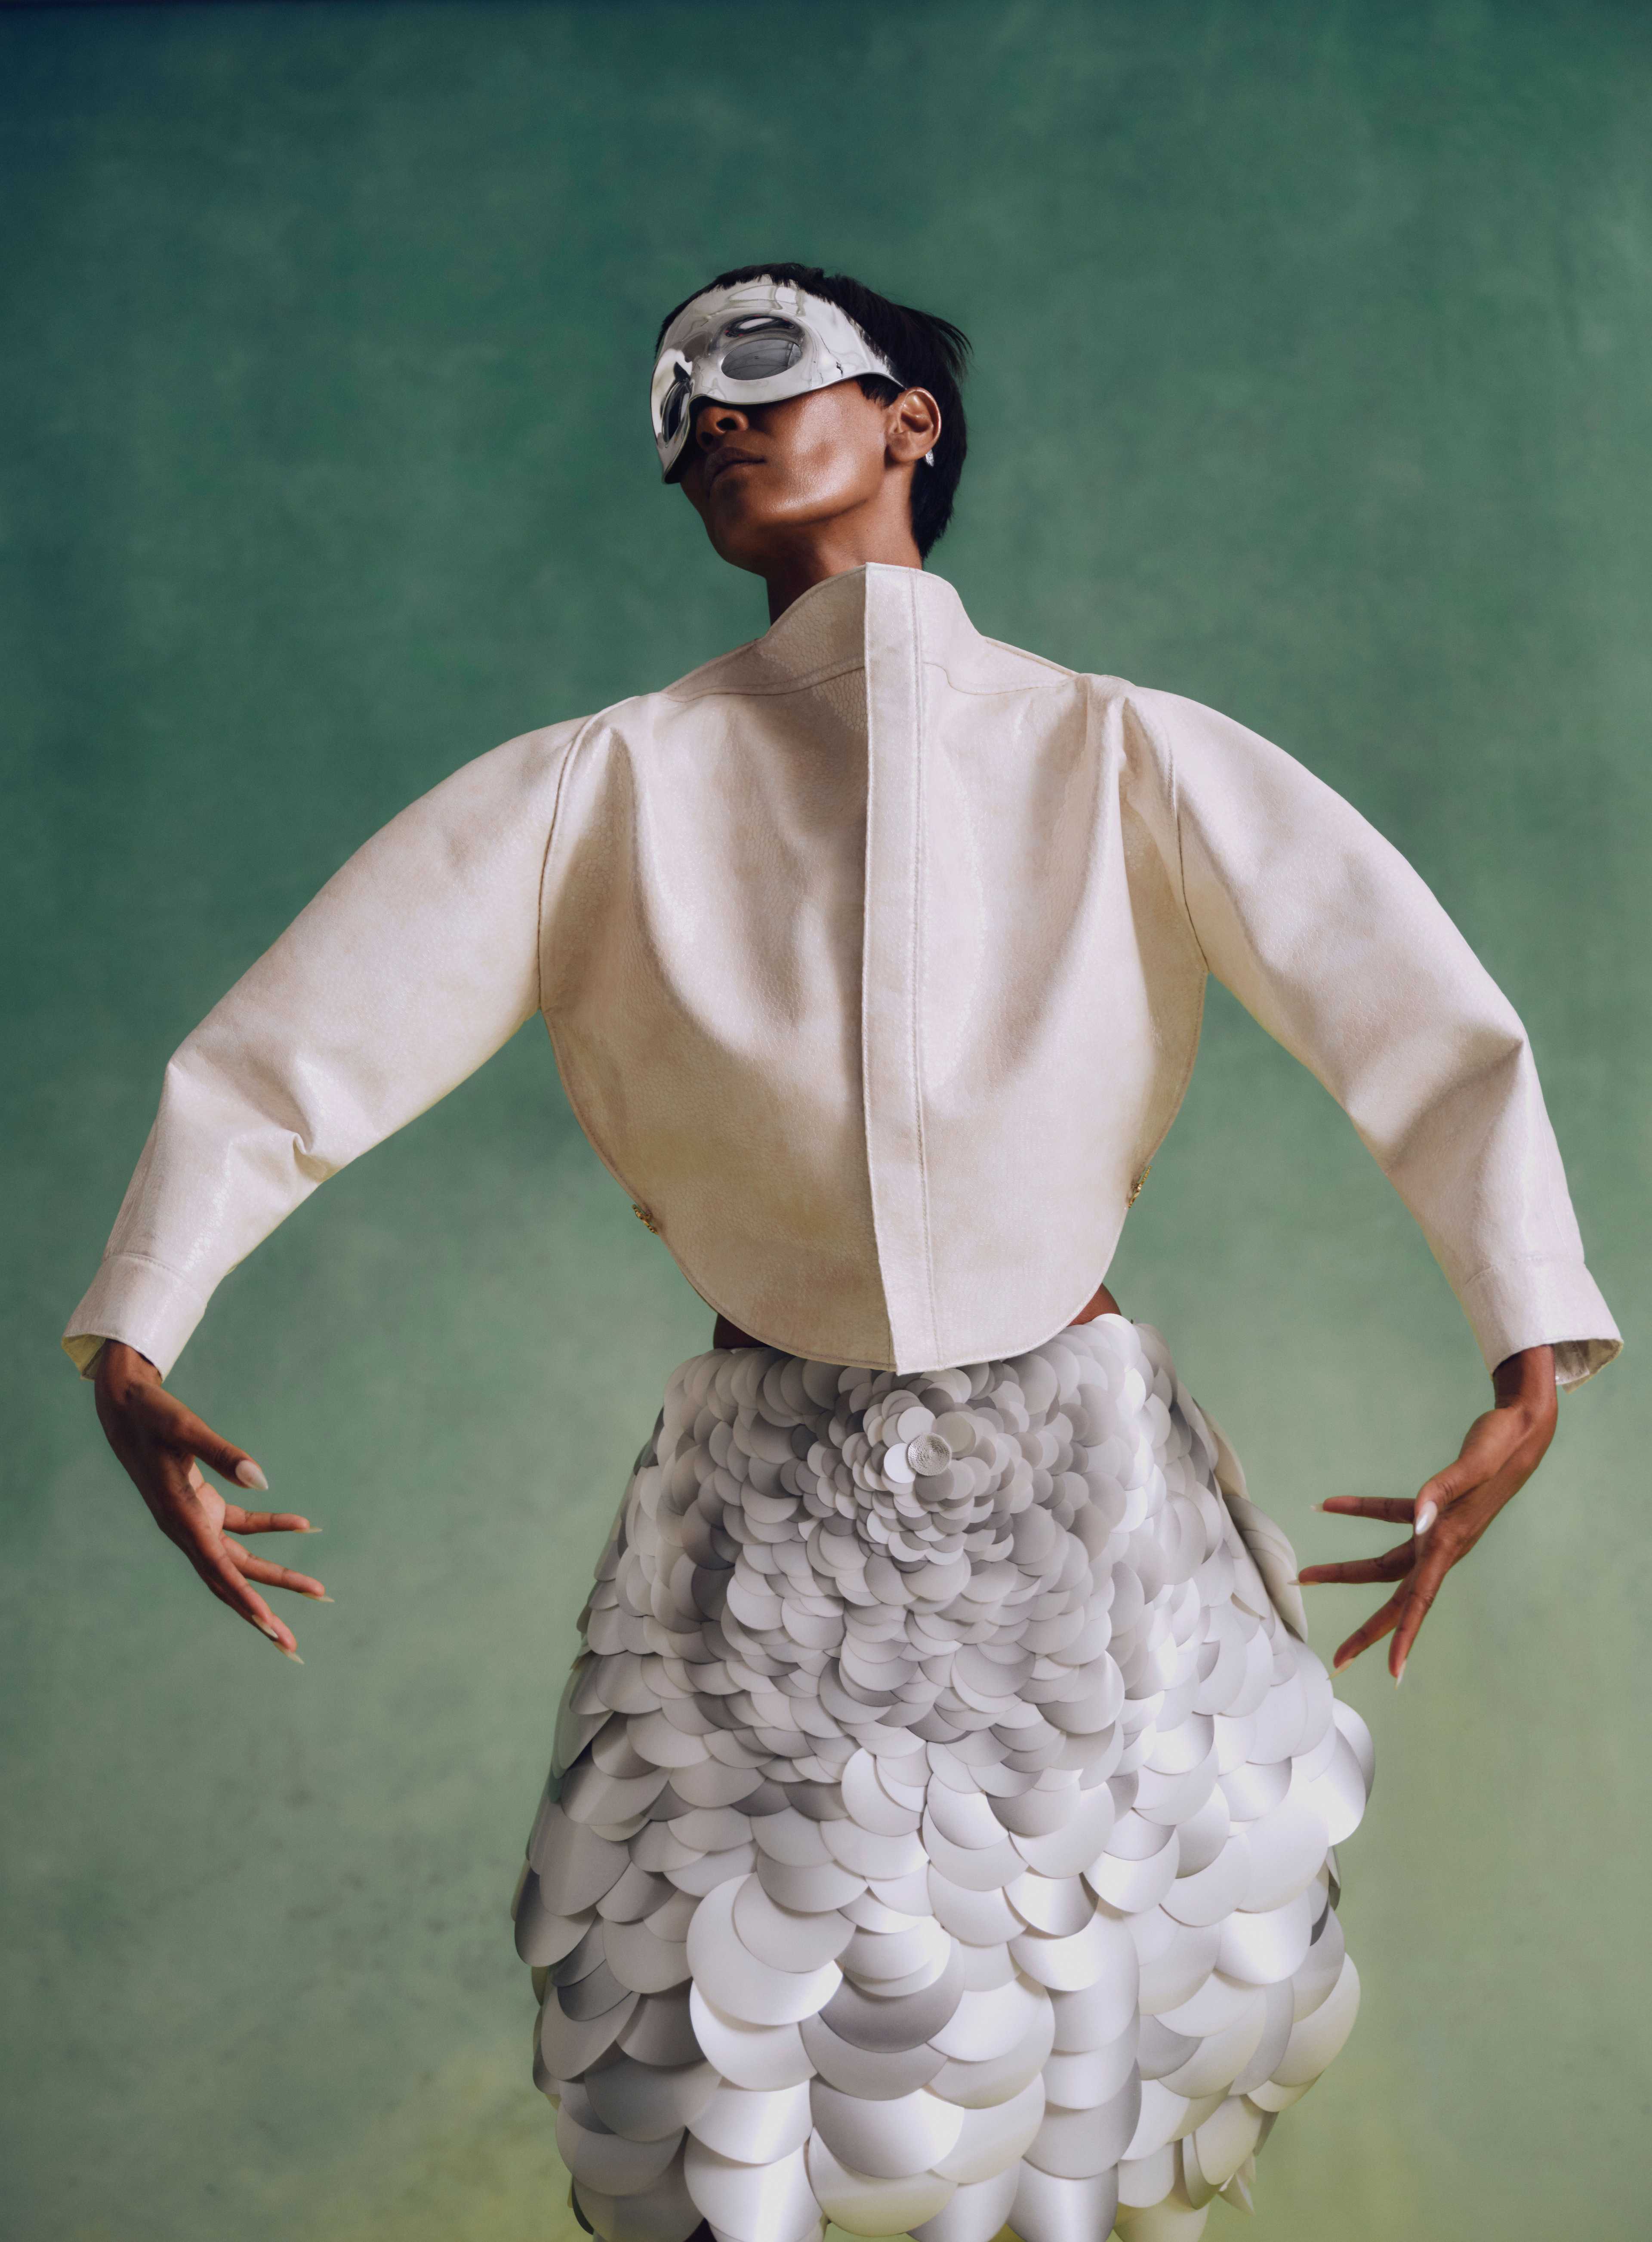 Vogue Italia - Campbell Addy + Yagamoto - 5959